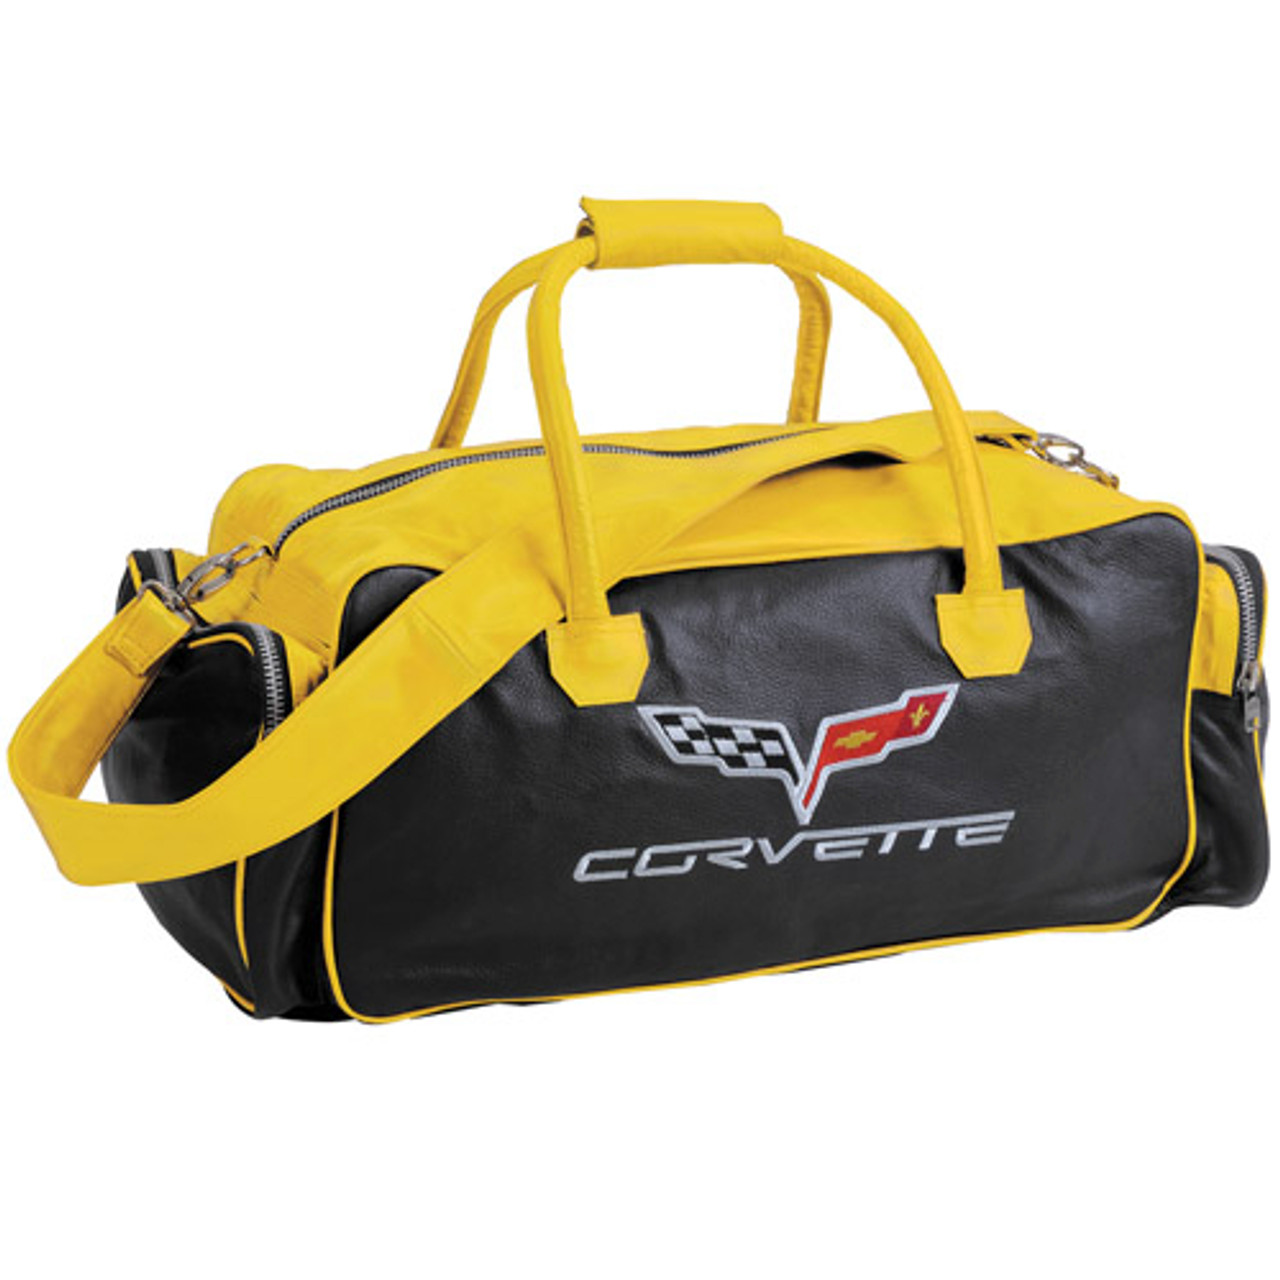 Leather Gym Bag Duffle Bag Yellow Large Leather Luggage 